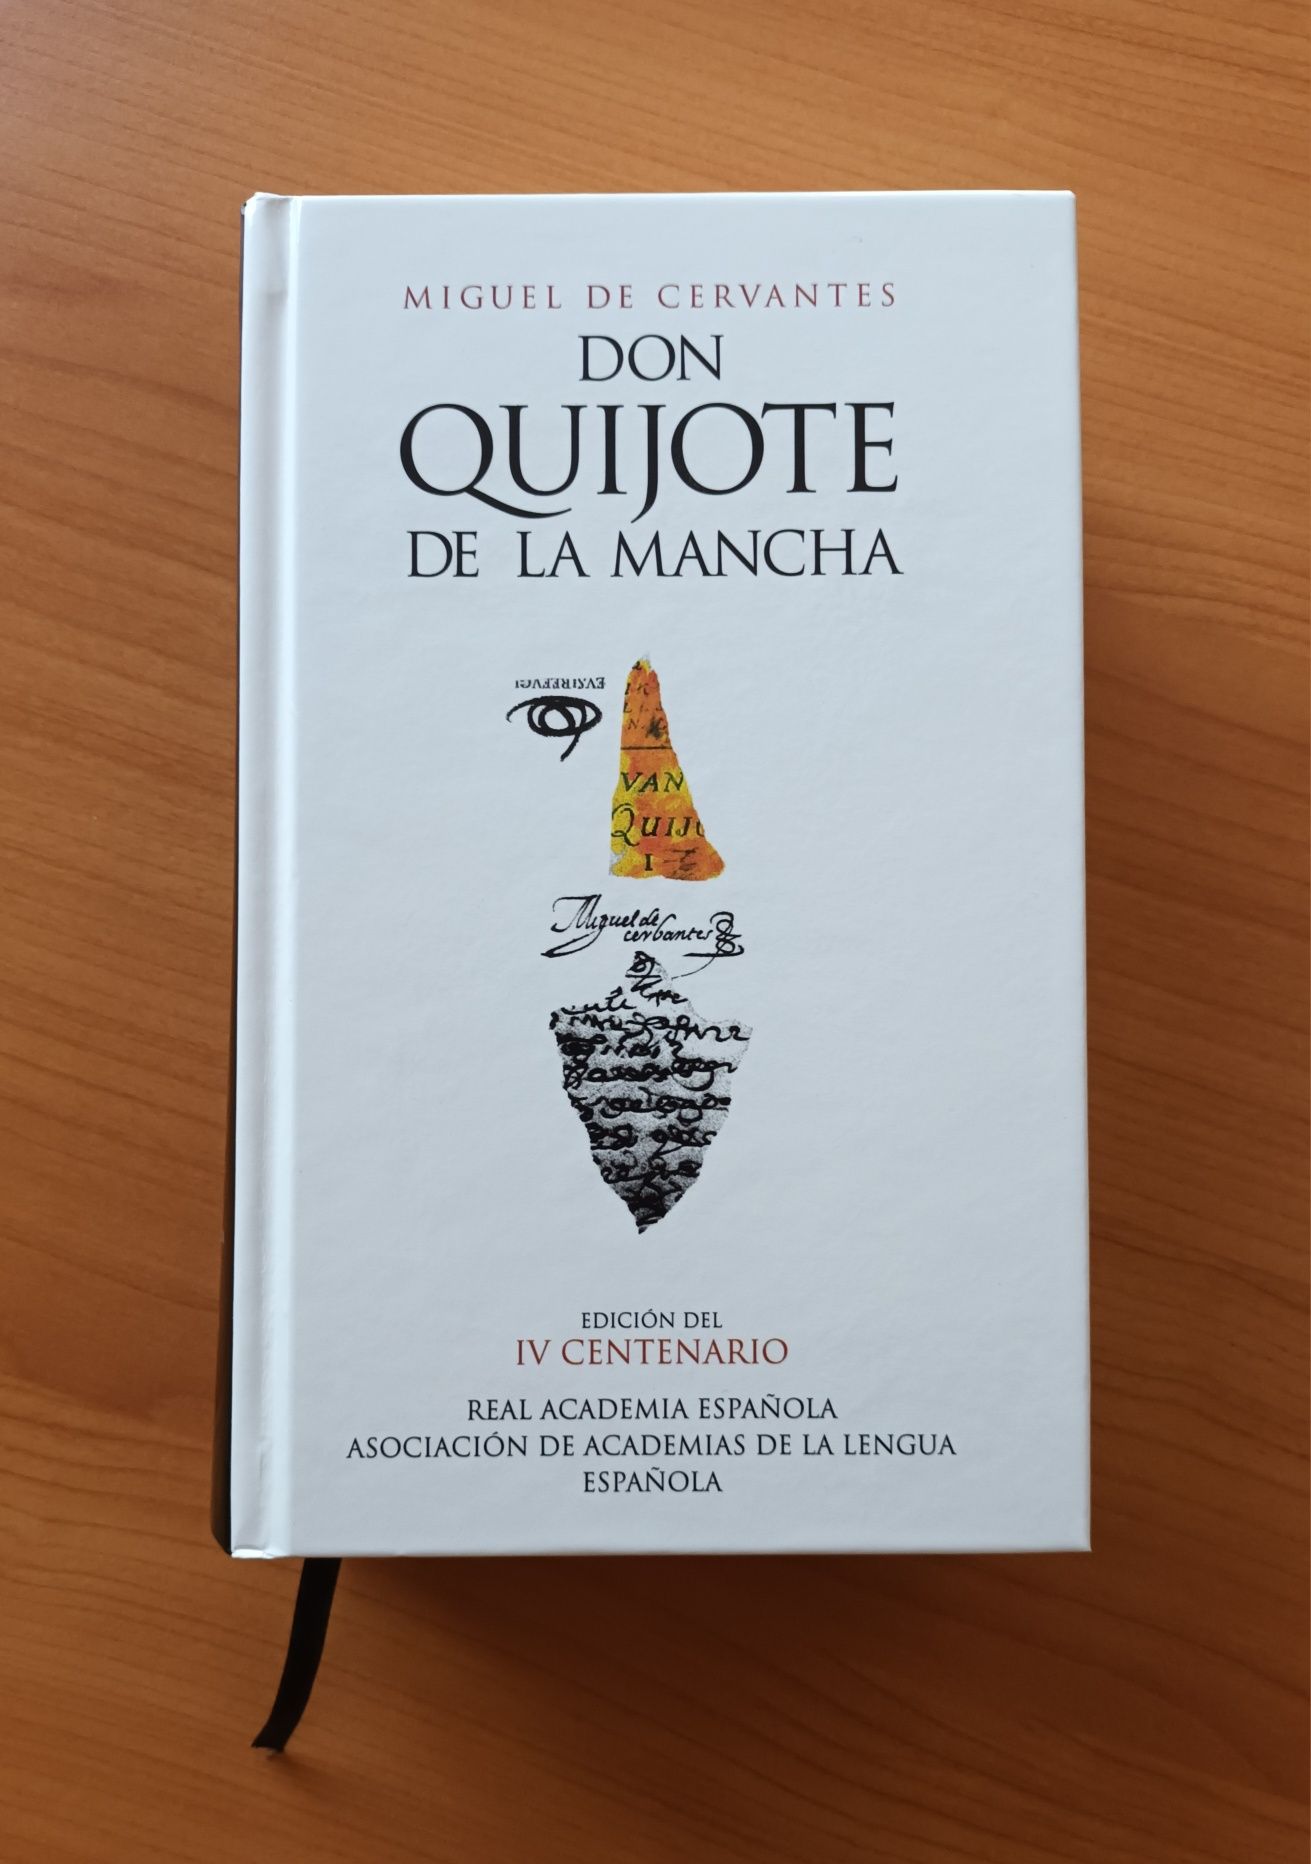 Don Quijote in spaniola